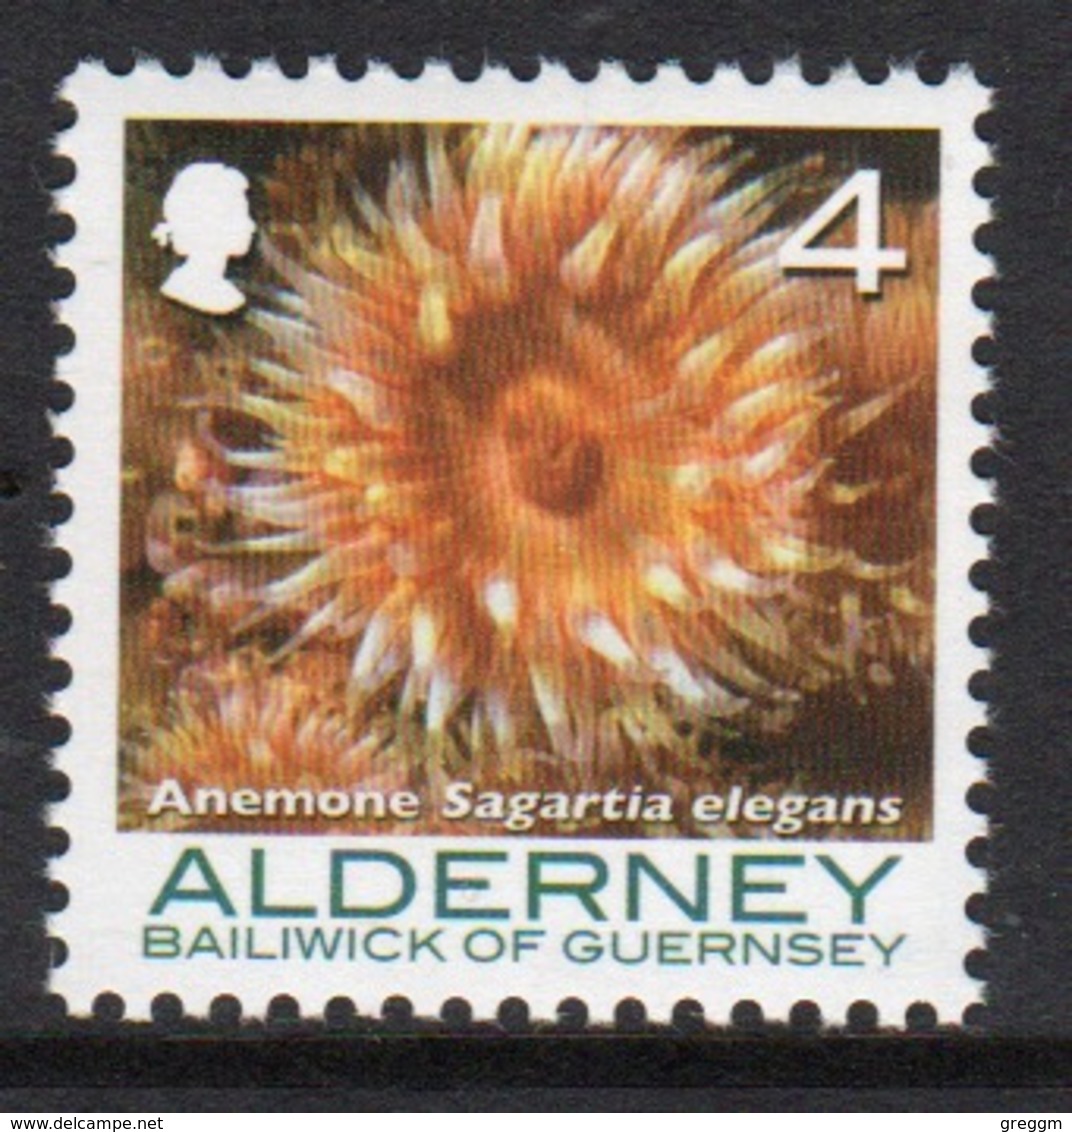 Alderney Single 4p Stamp From The 'Corals And Anemones' Definitive Set. - Alderney